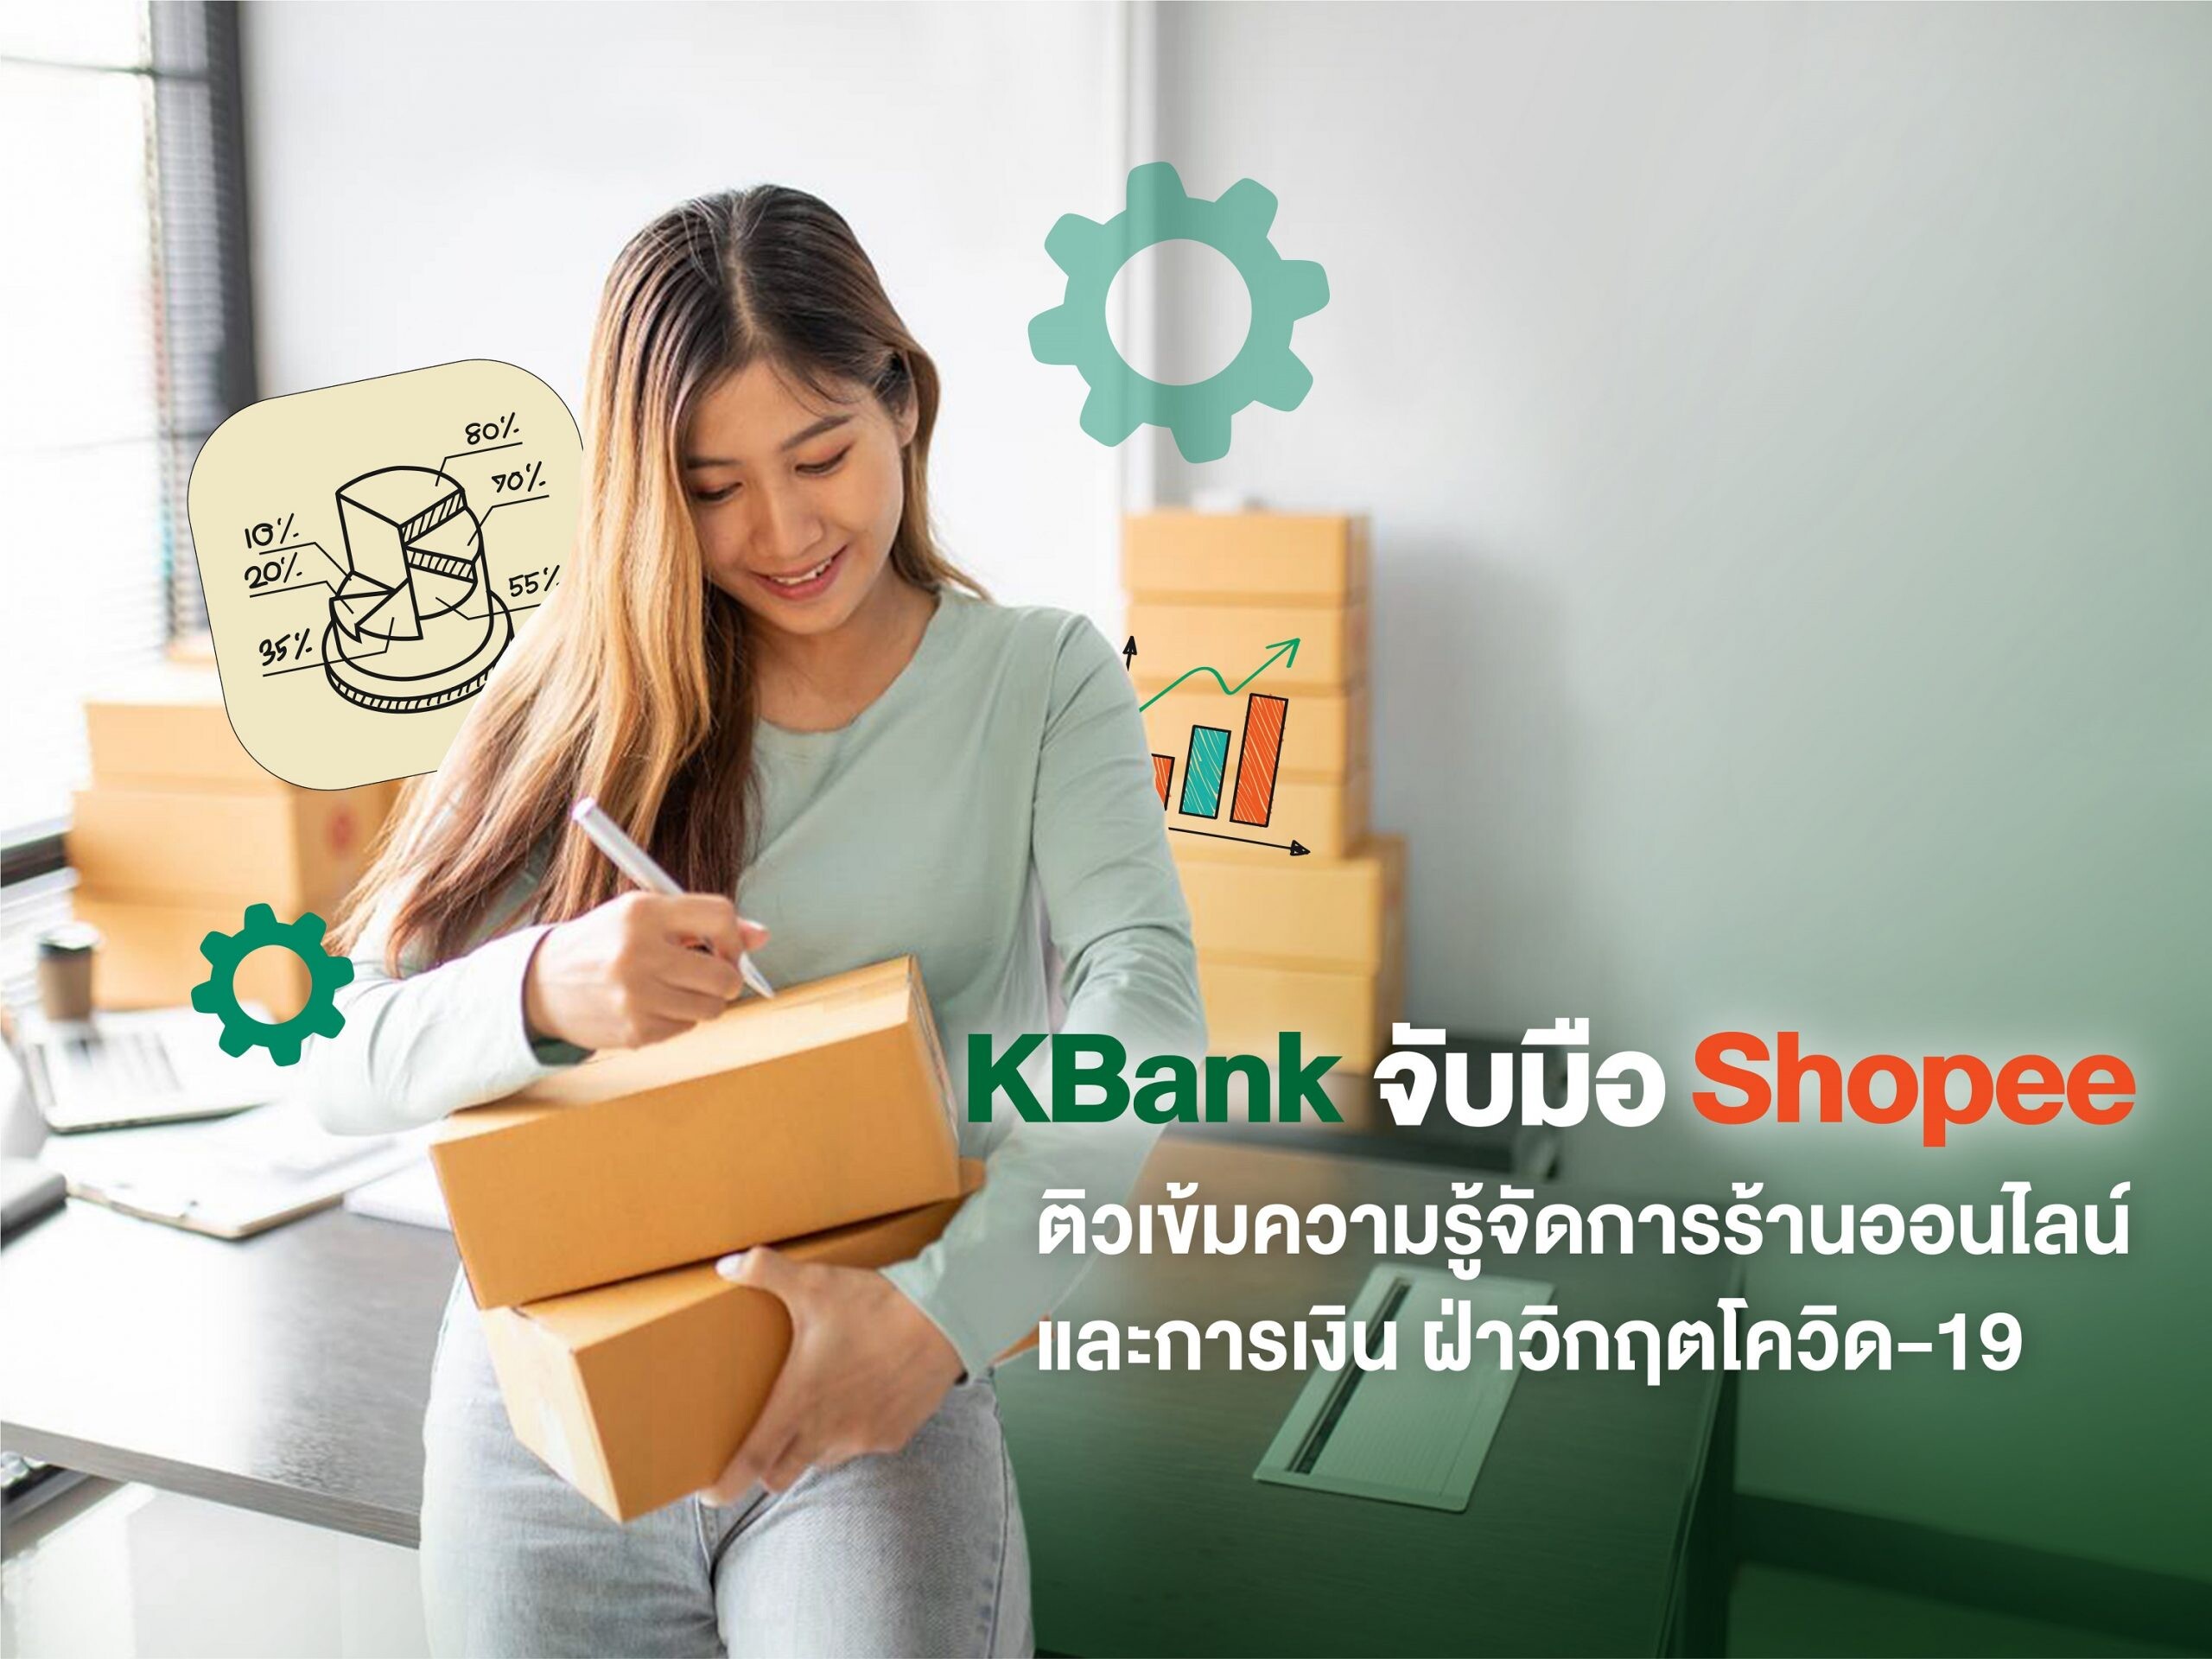 KBank จับมือ Shopee ติวเข้มเทคนิคบริหารเงินและจัดการร้านออนไลน์ ฝ่าวิกฤตโควิด-19